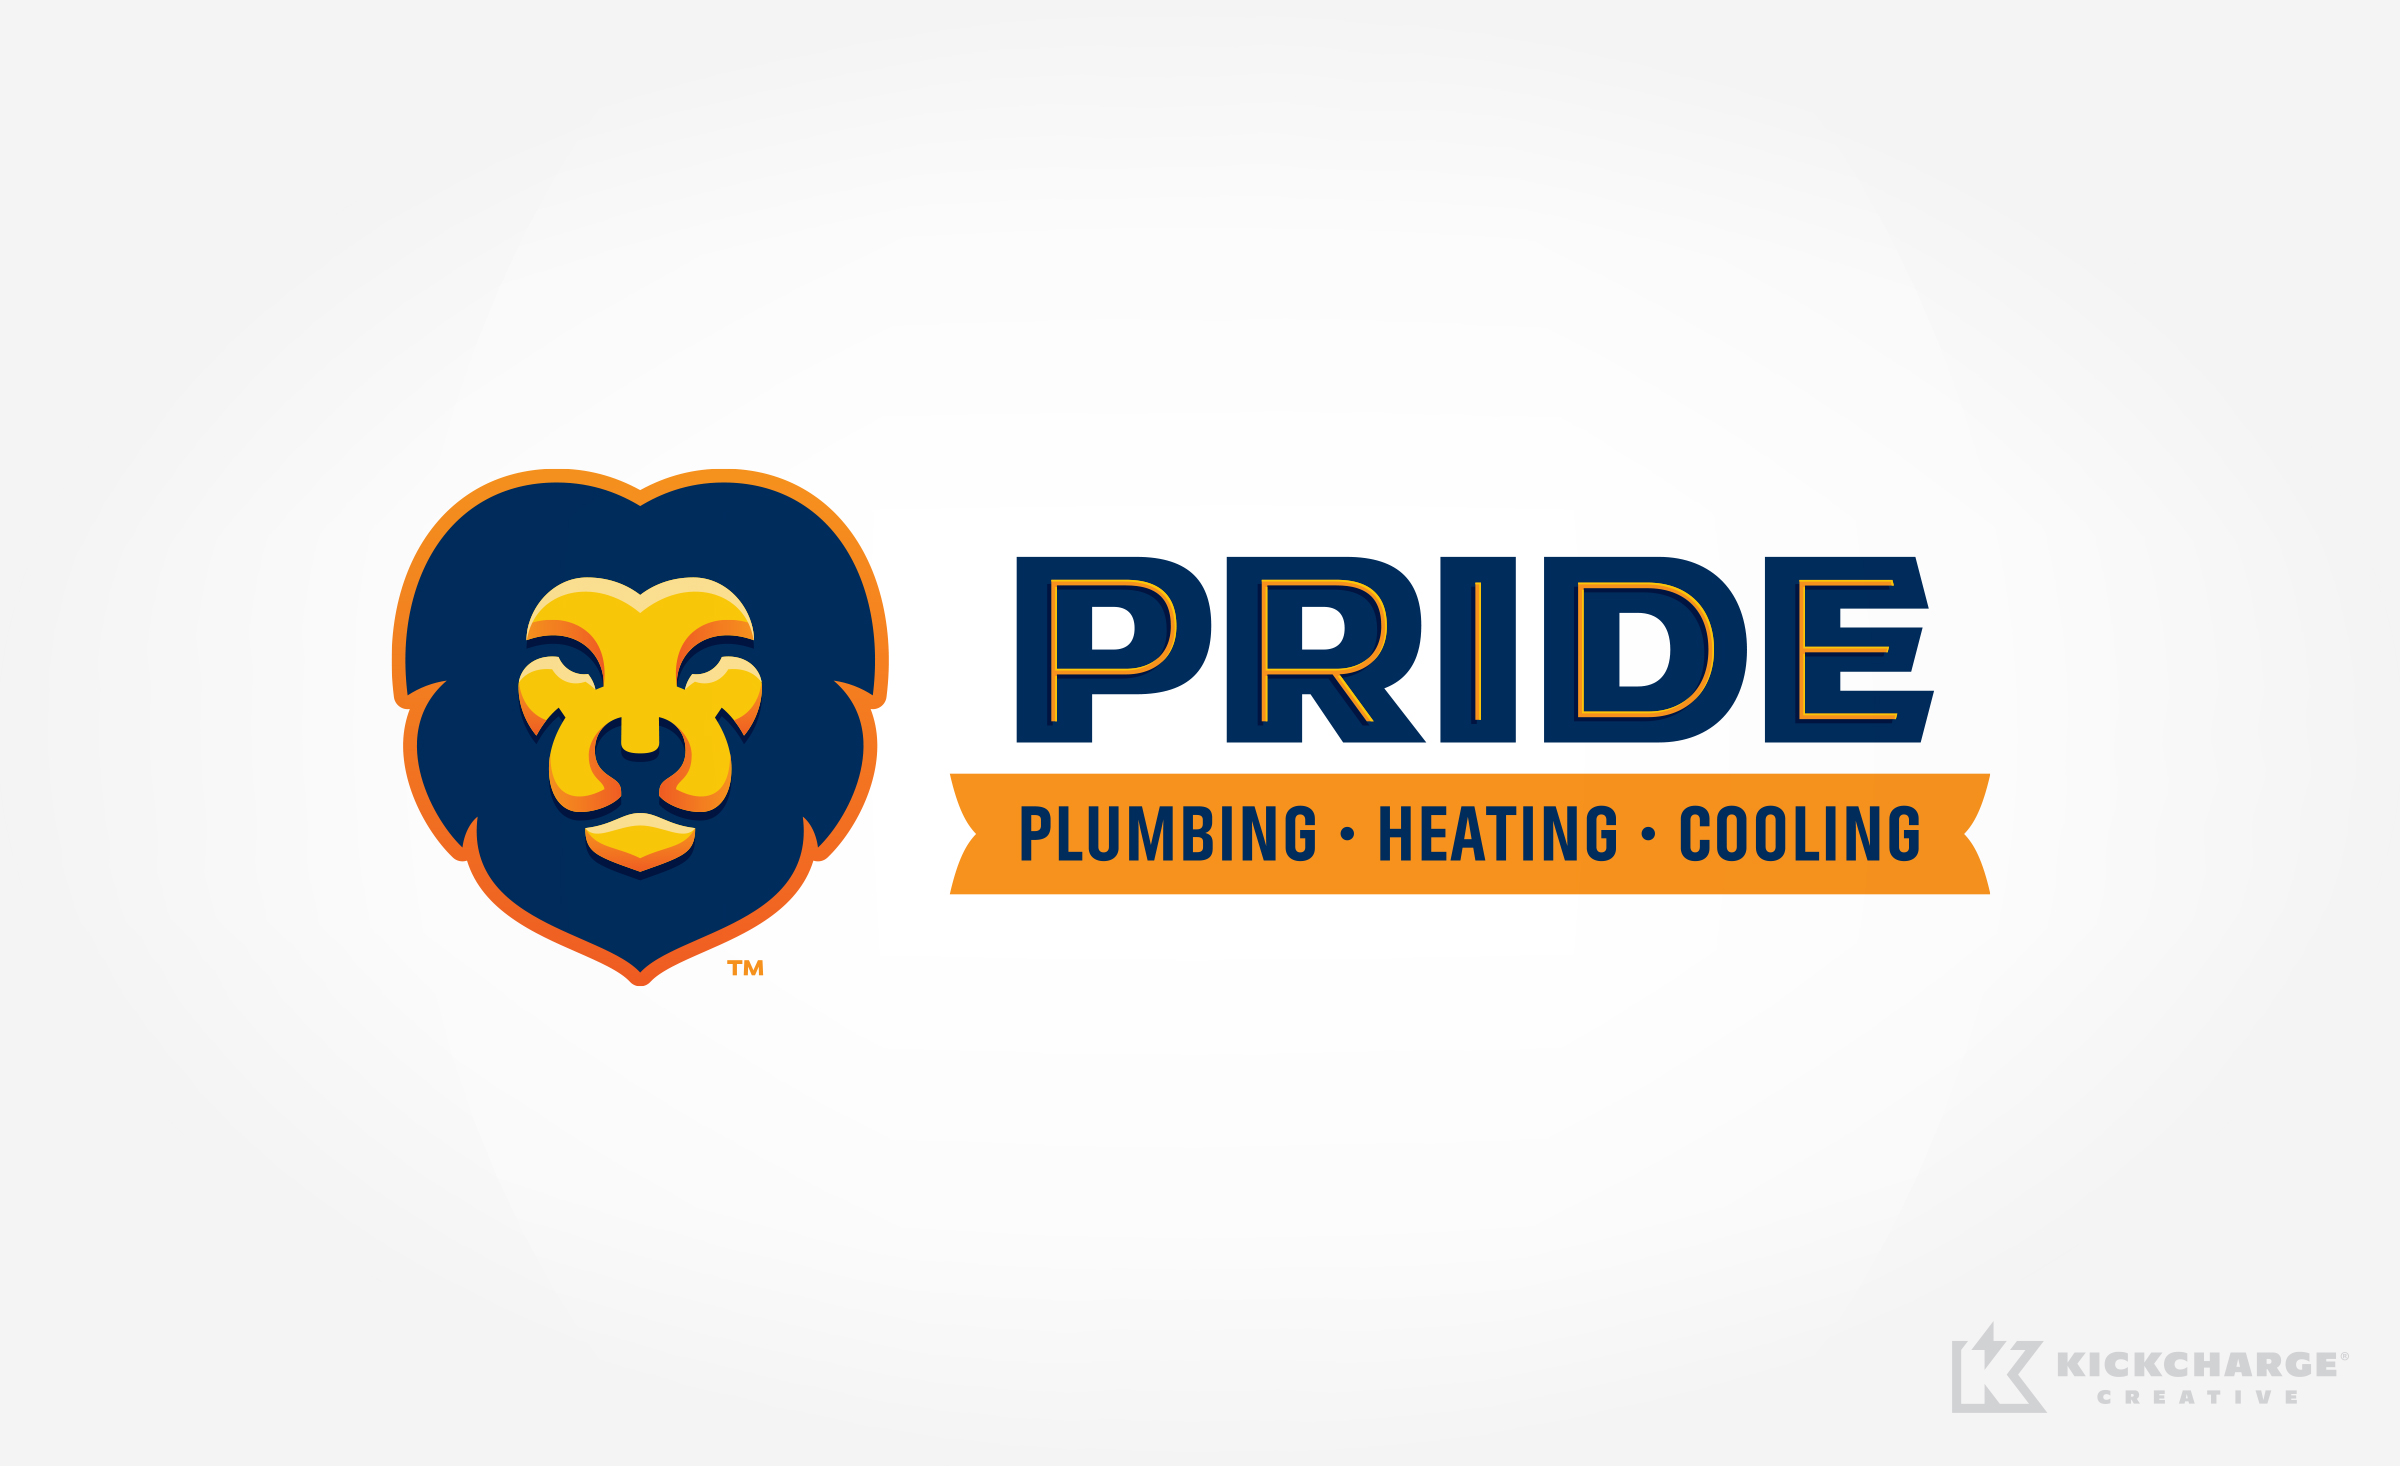 hvac and plumbing logo for Pride Plumbing, Heating & Cooling